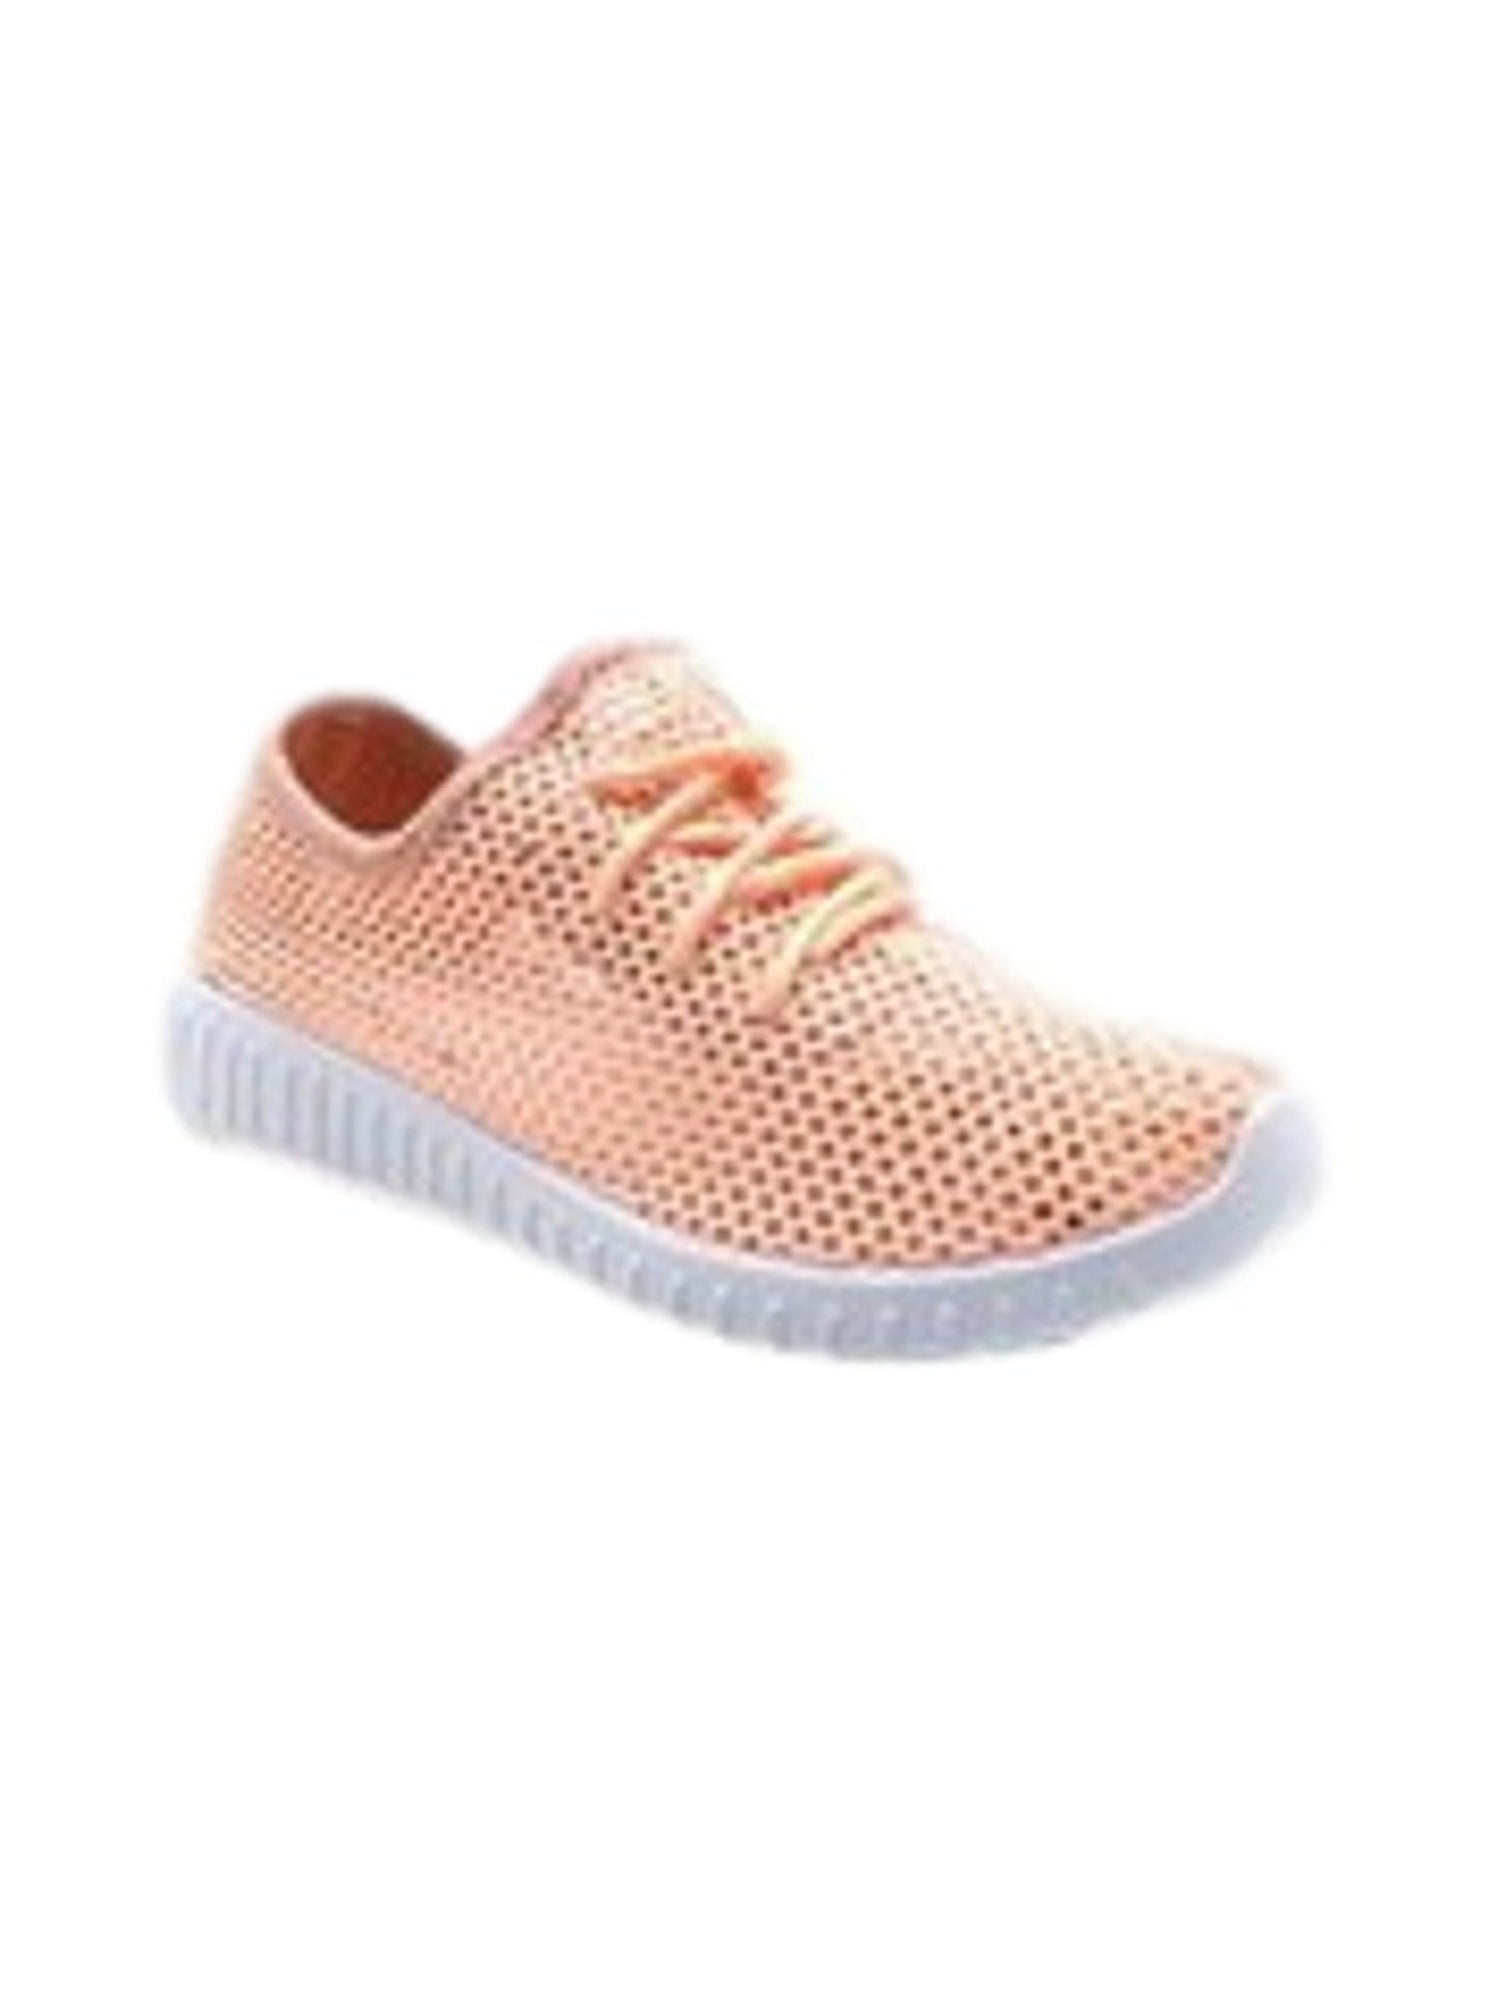 Trending Knit Sneakers, Pink - Walmart 